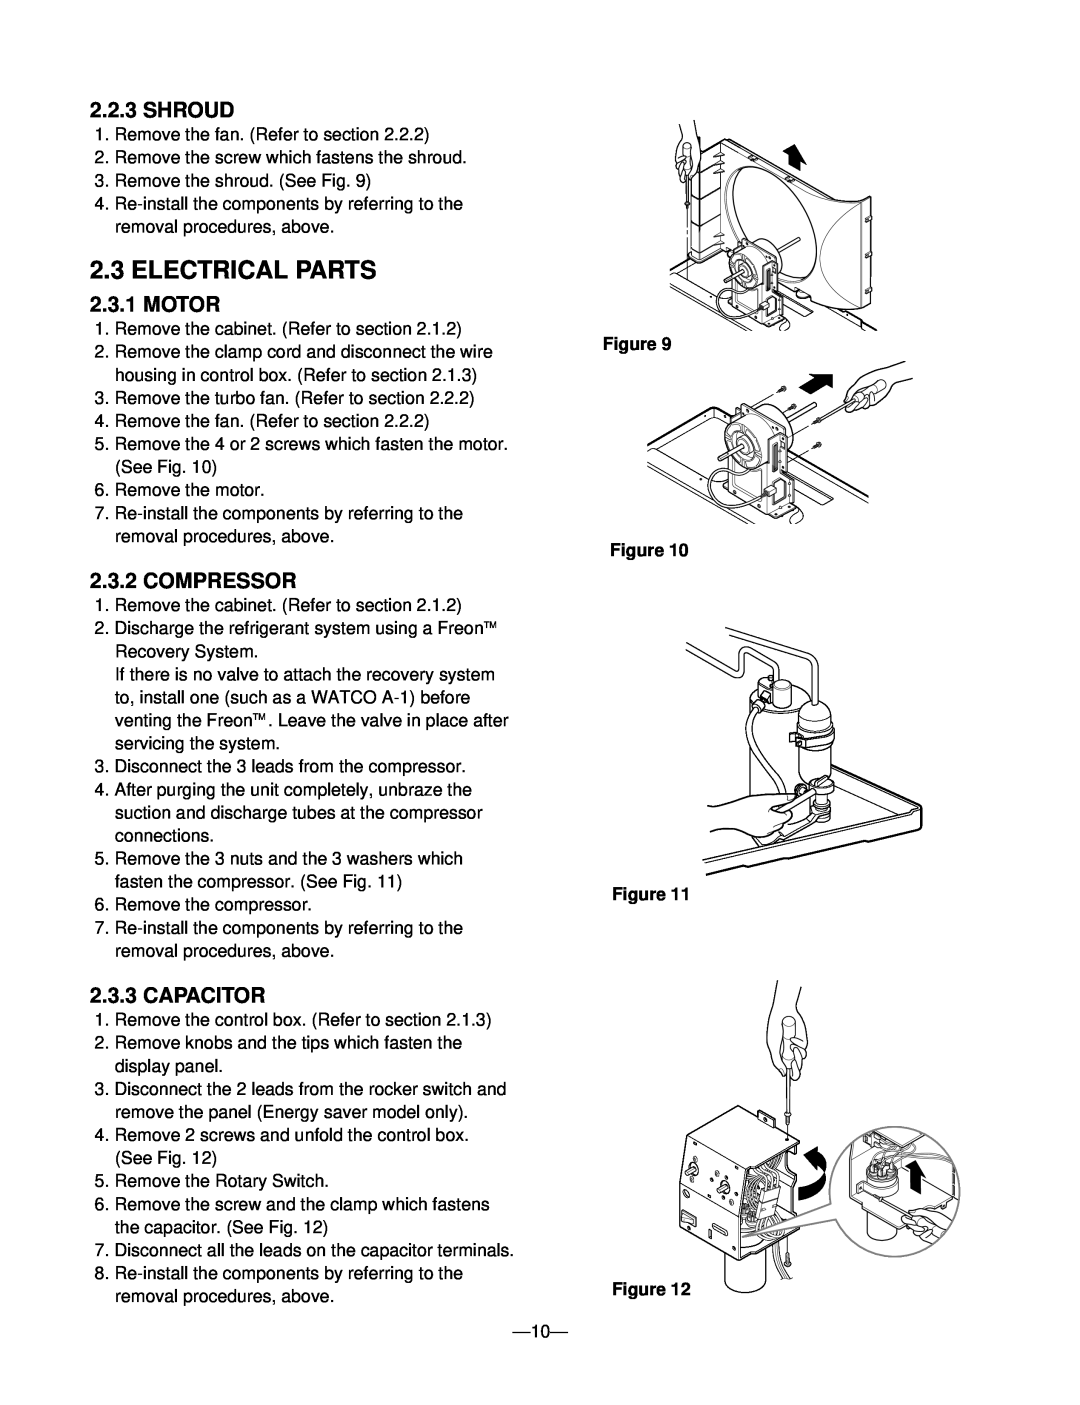 Heat Controller BD-101, BD-123, BDE-103, BD-81 Electrical Parts, Shroud, Motor, Compressor, Capacitor, Figure Figure Figure 